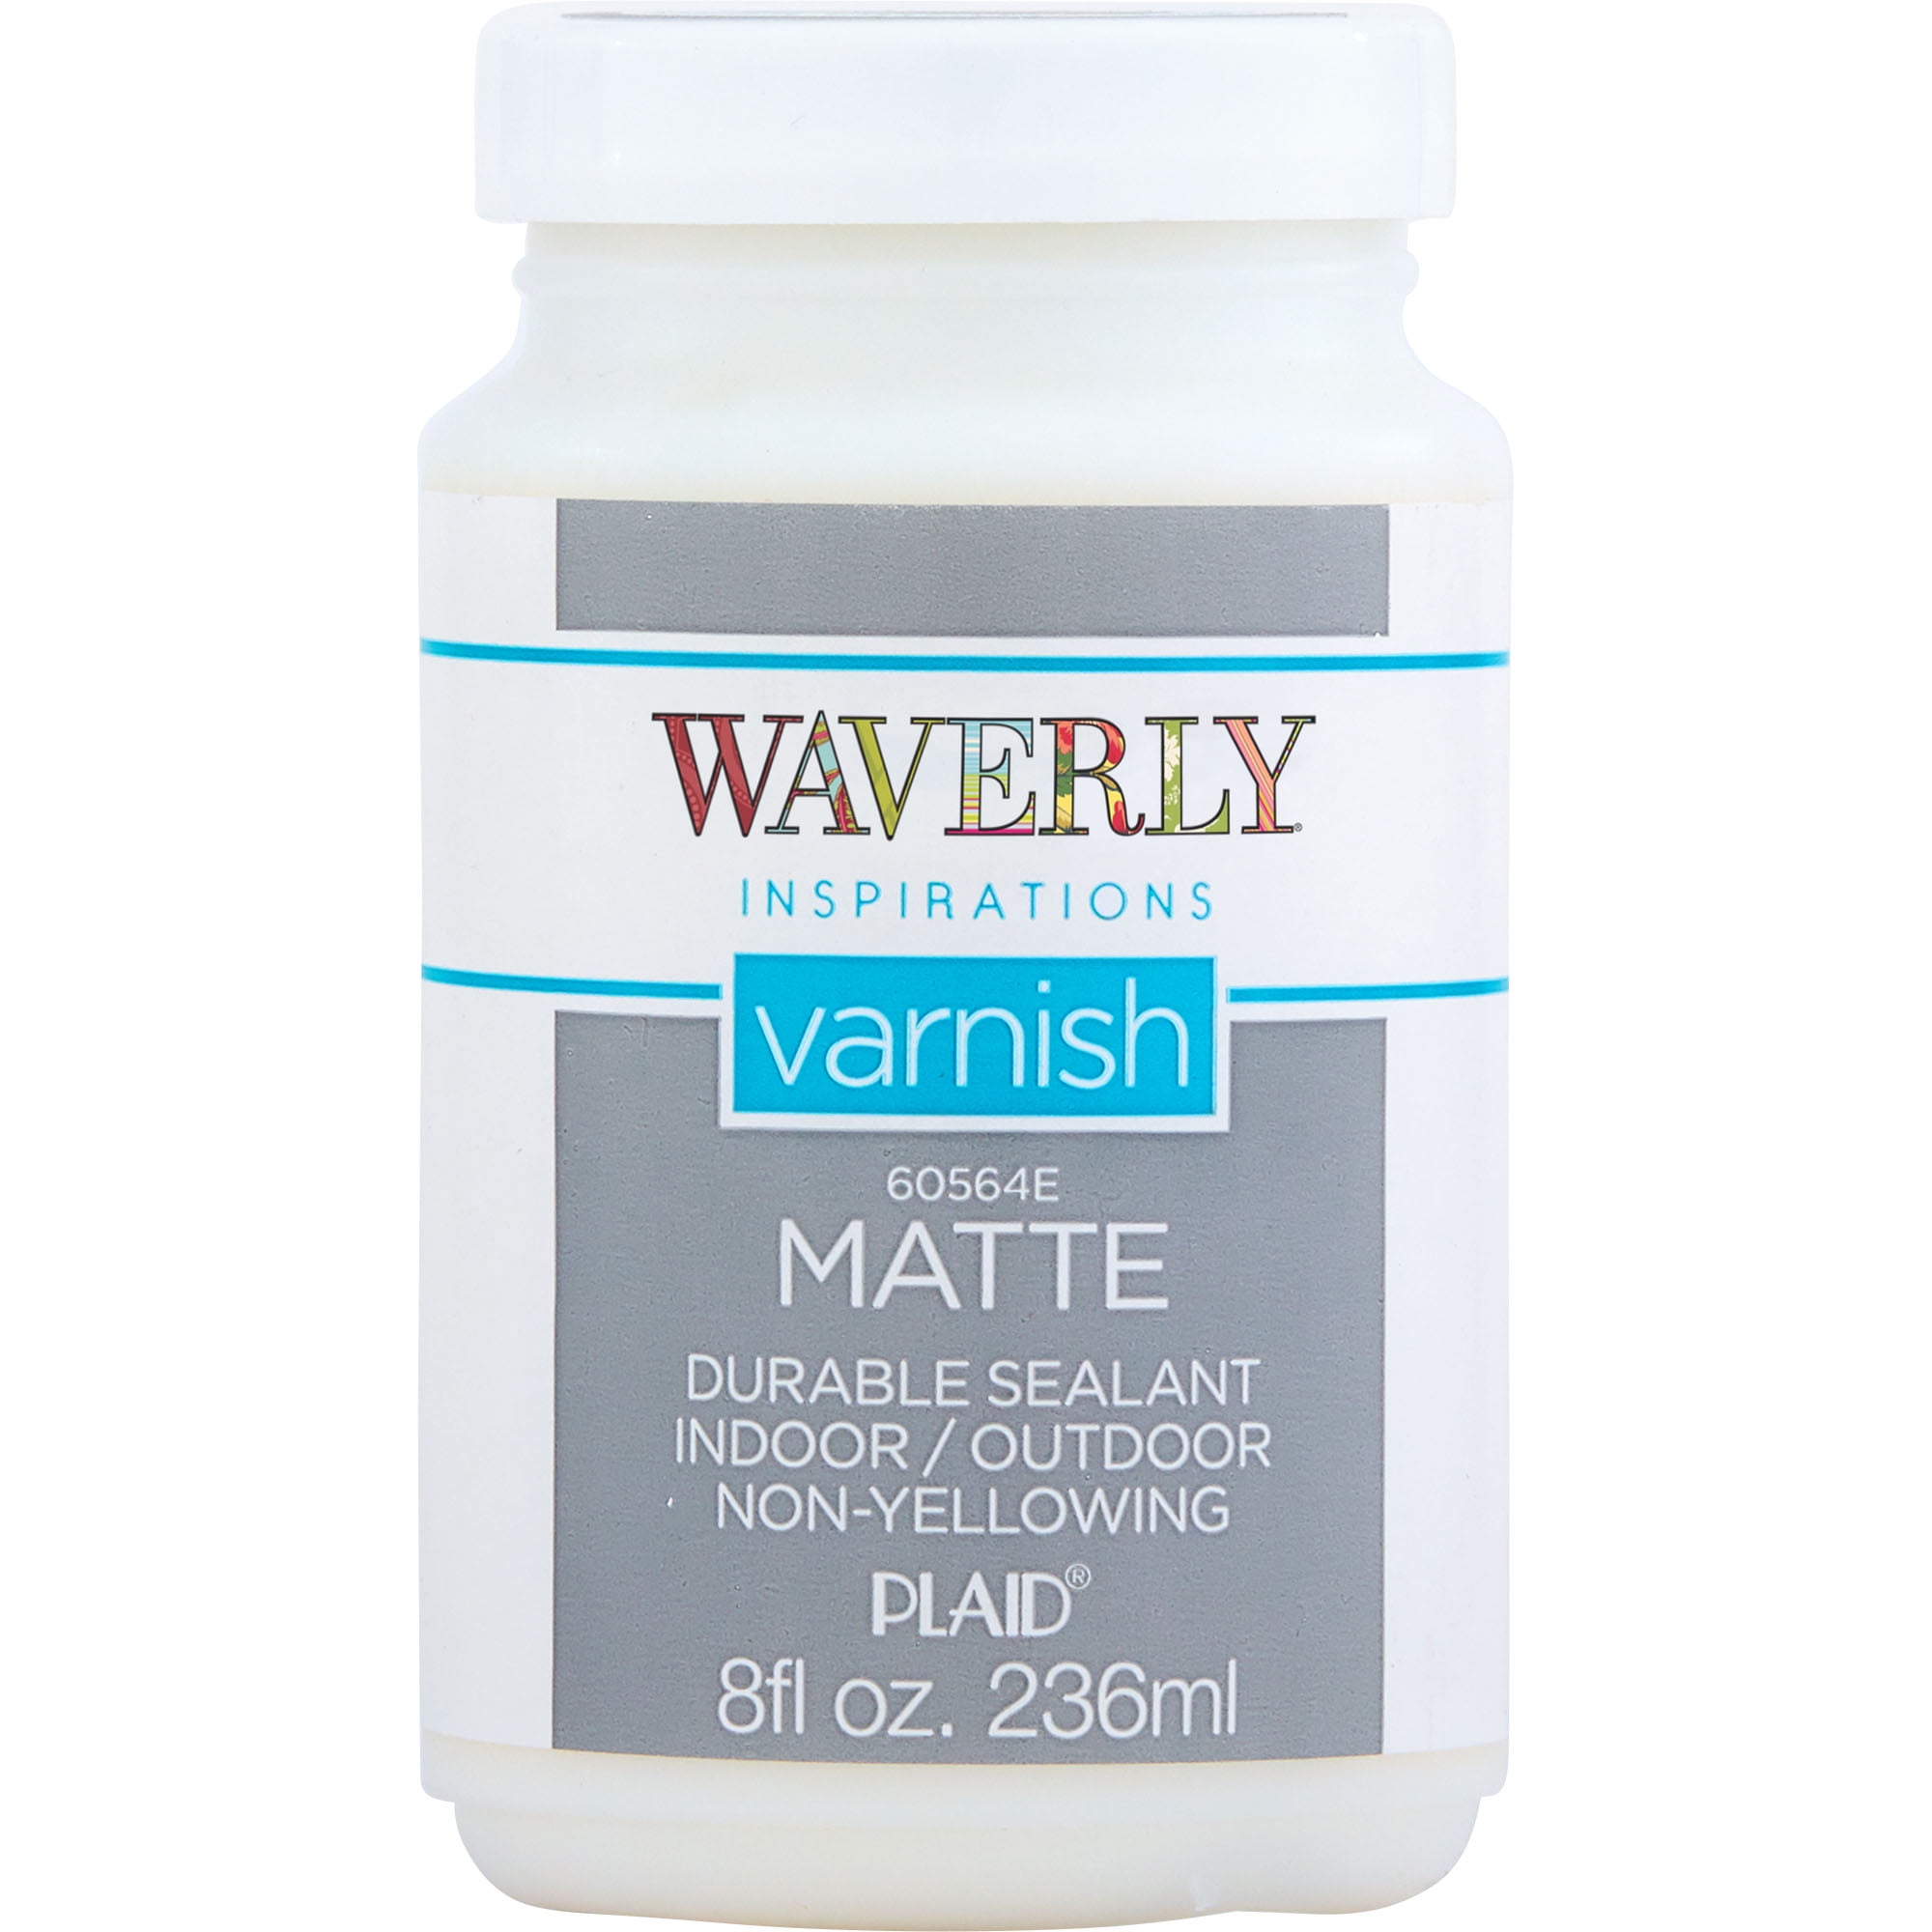 Waverly Inspirations Matte Chalk Paint Varnish, Clear, 8 fl oz